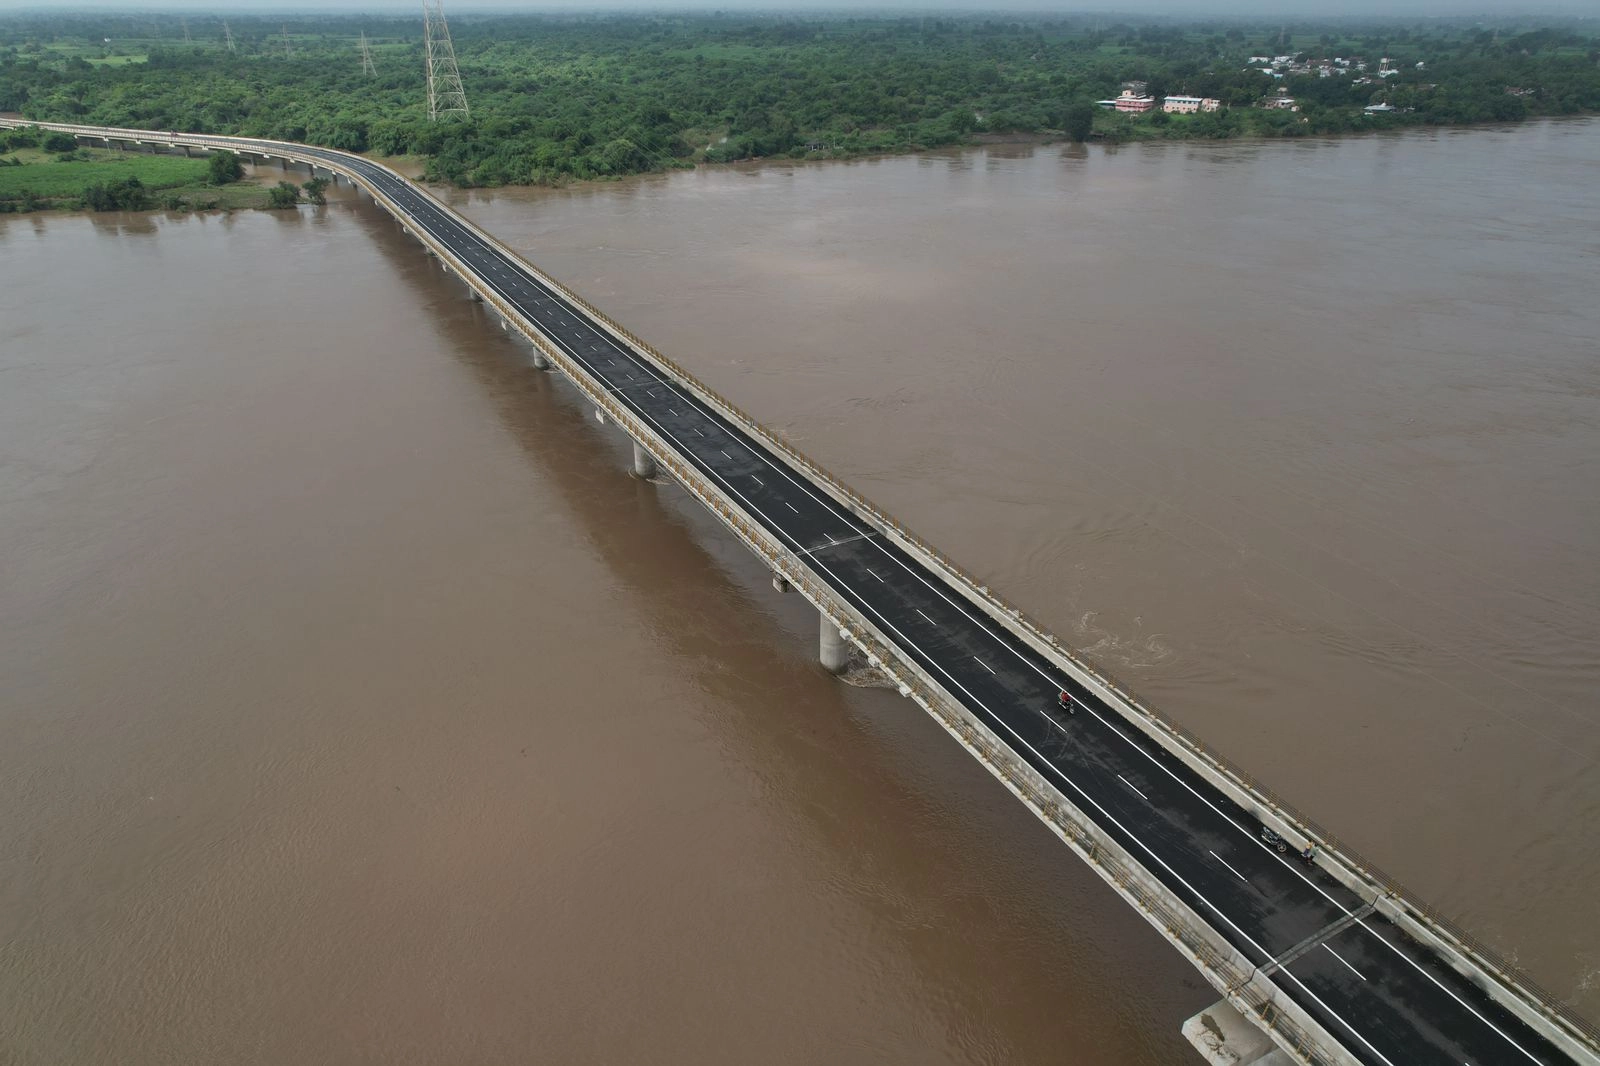 Built near Malsar on Narmada River Rs. The 225 crore bridge will be inaugurated by Prime Minister Shri Narendrabhai Modi